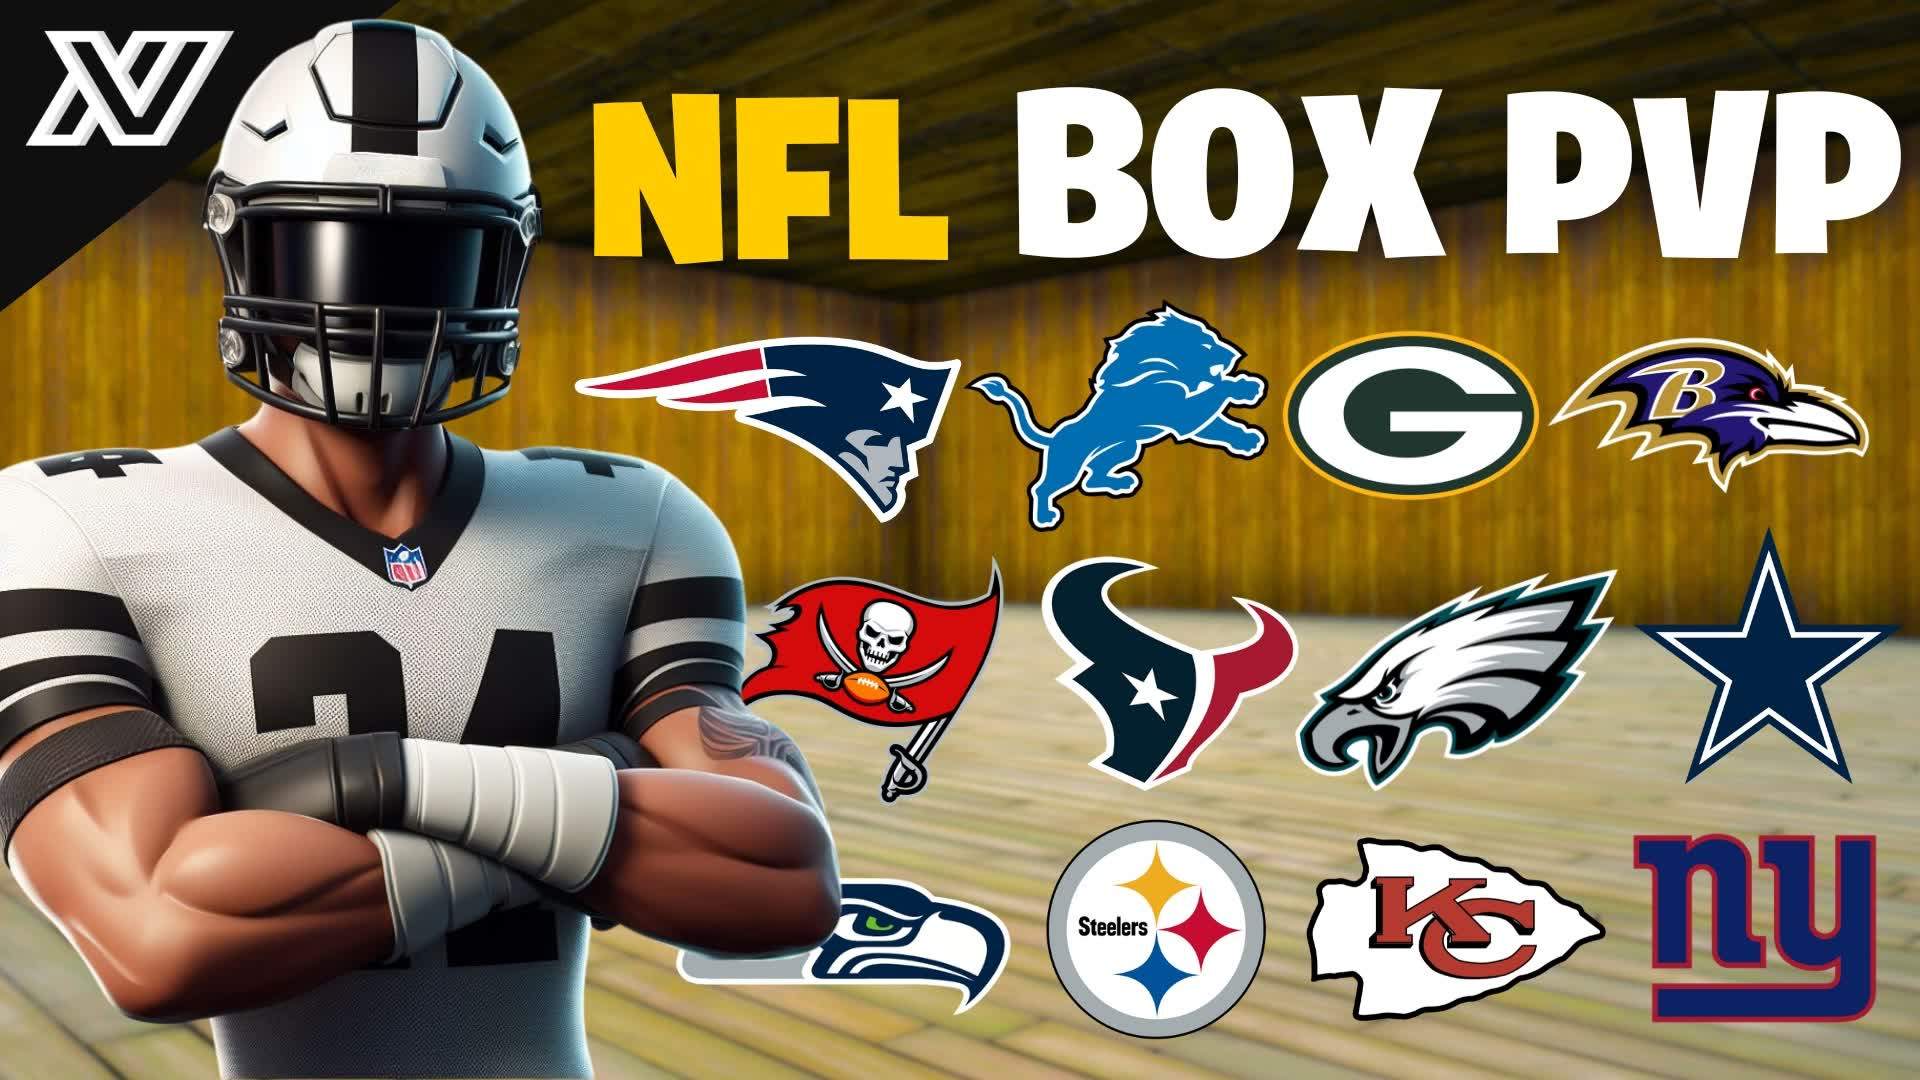 NFL Box PvP